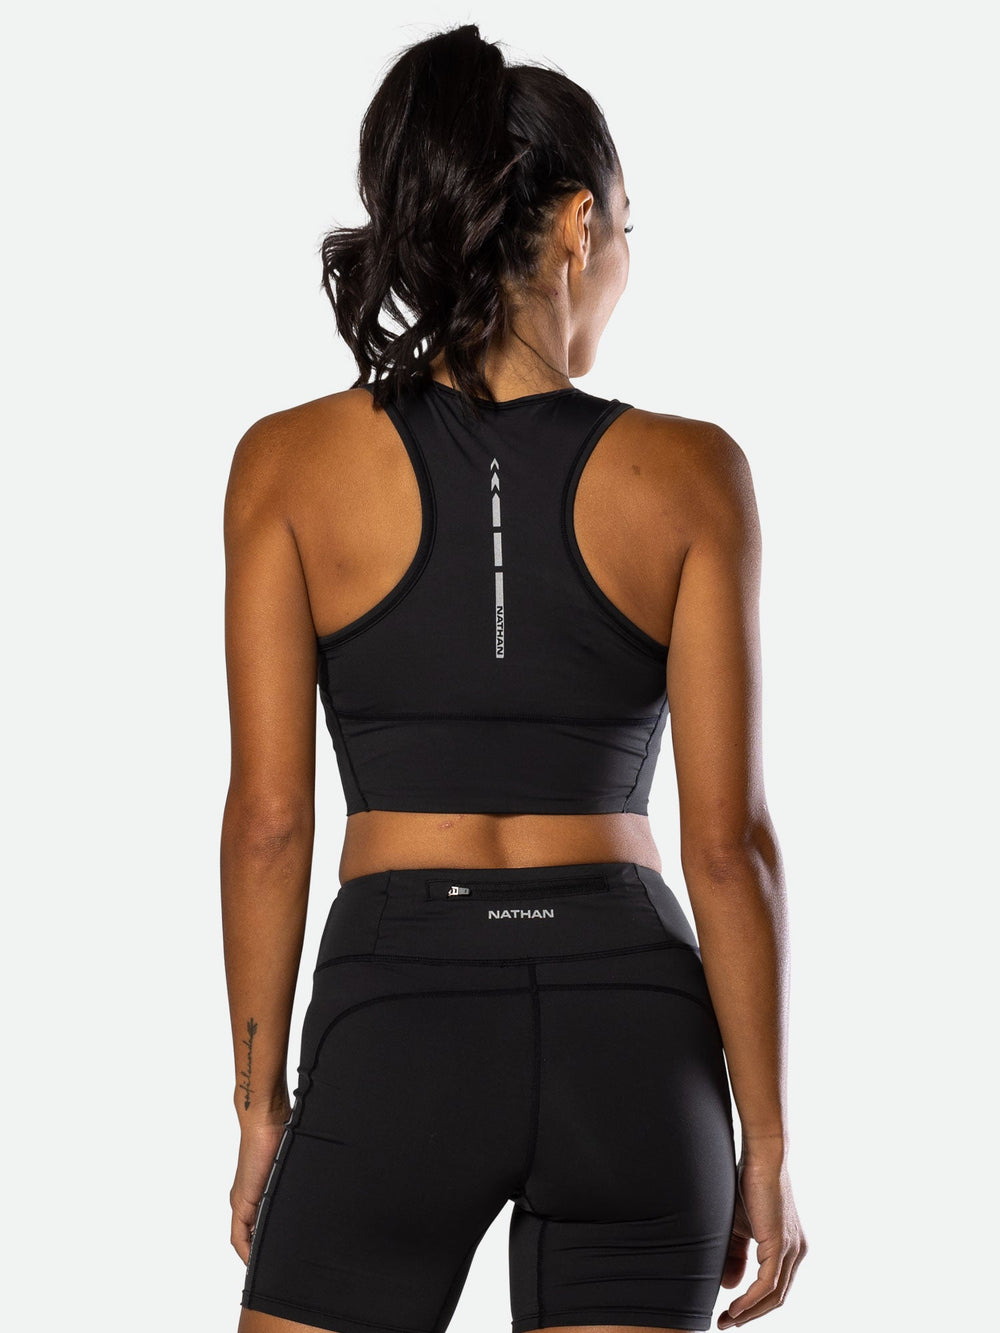 Sport Women Compression Cropped Wear Gilet Yoga Tank Tops Ladies